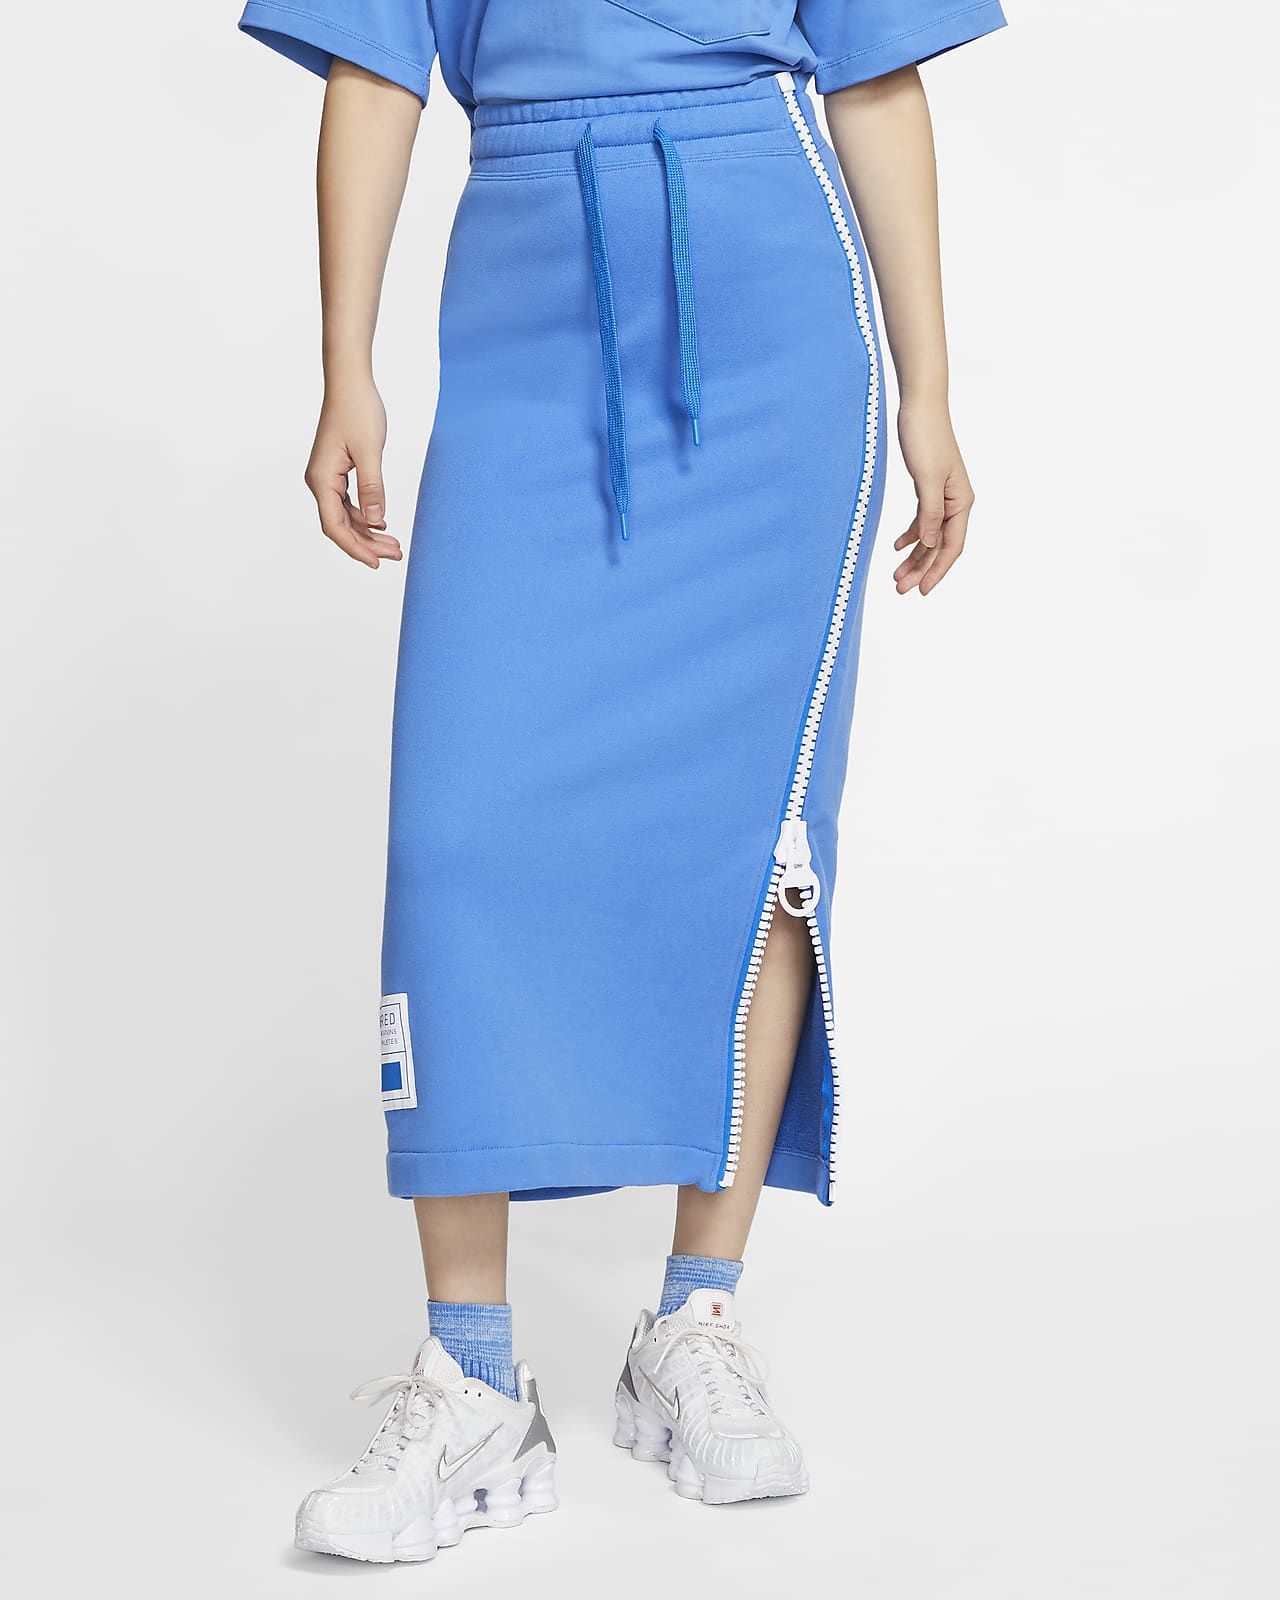 amazon long skirt with top